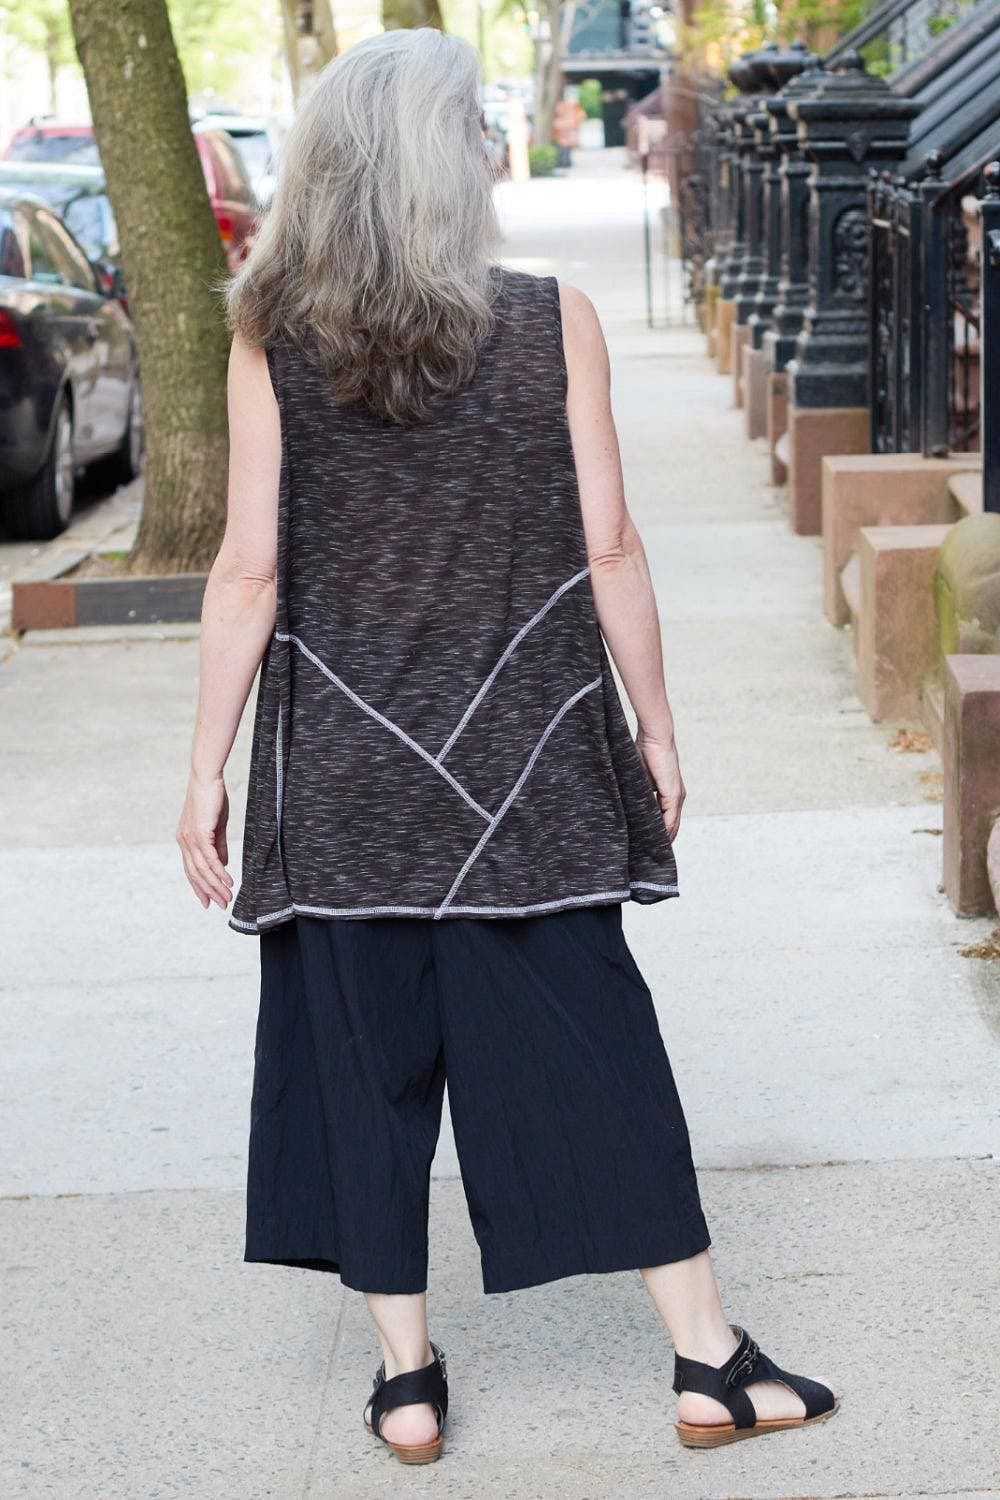 Back view of Long Grey hair woman wearing a Grey Fleck Aline Tank with full cut black crop pants walking on the street